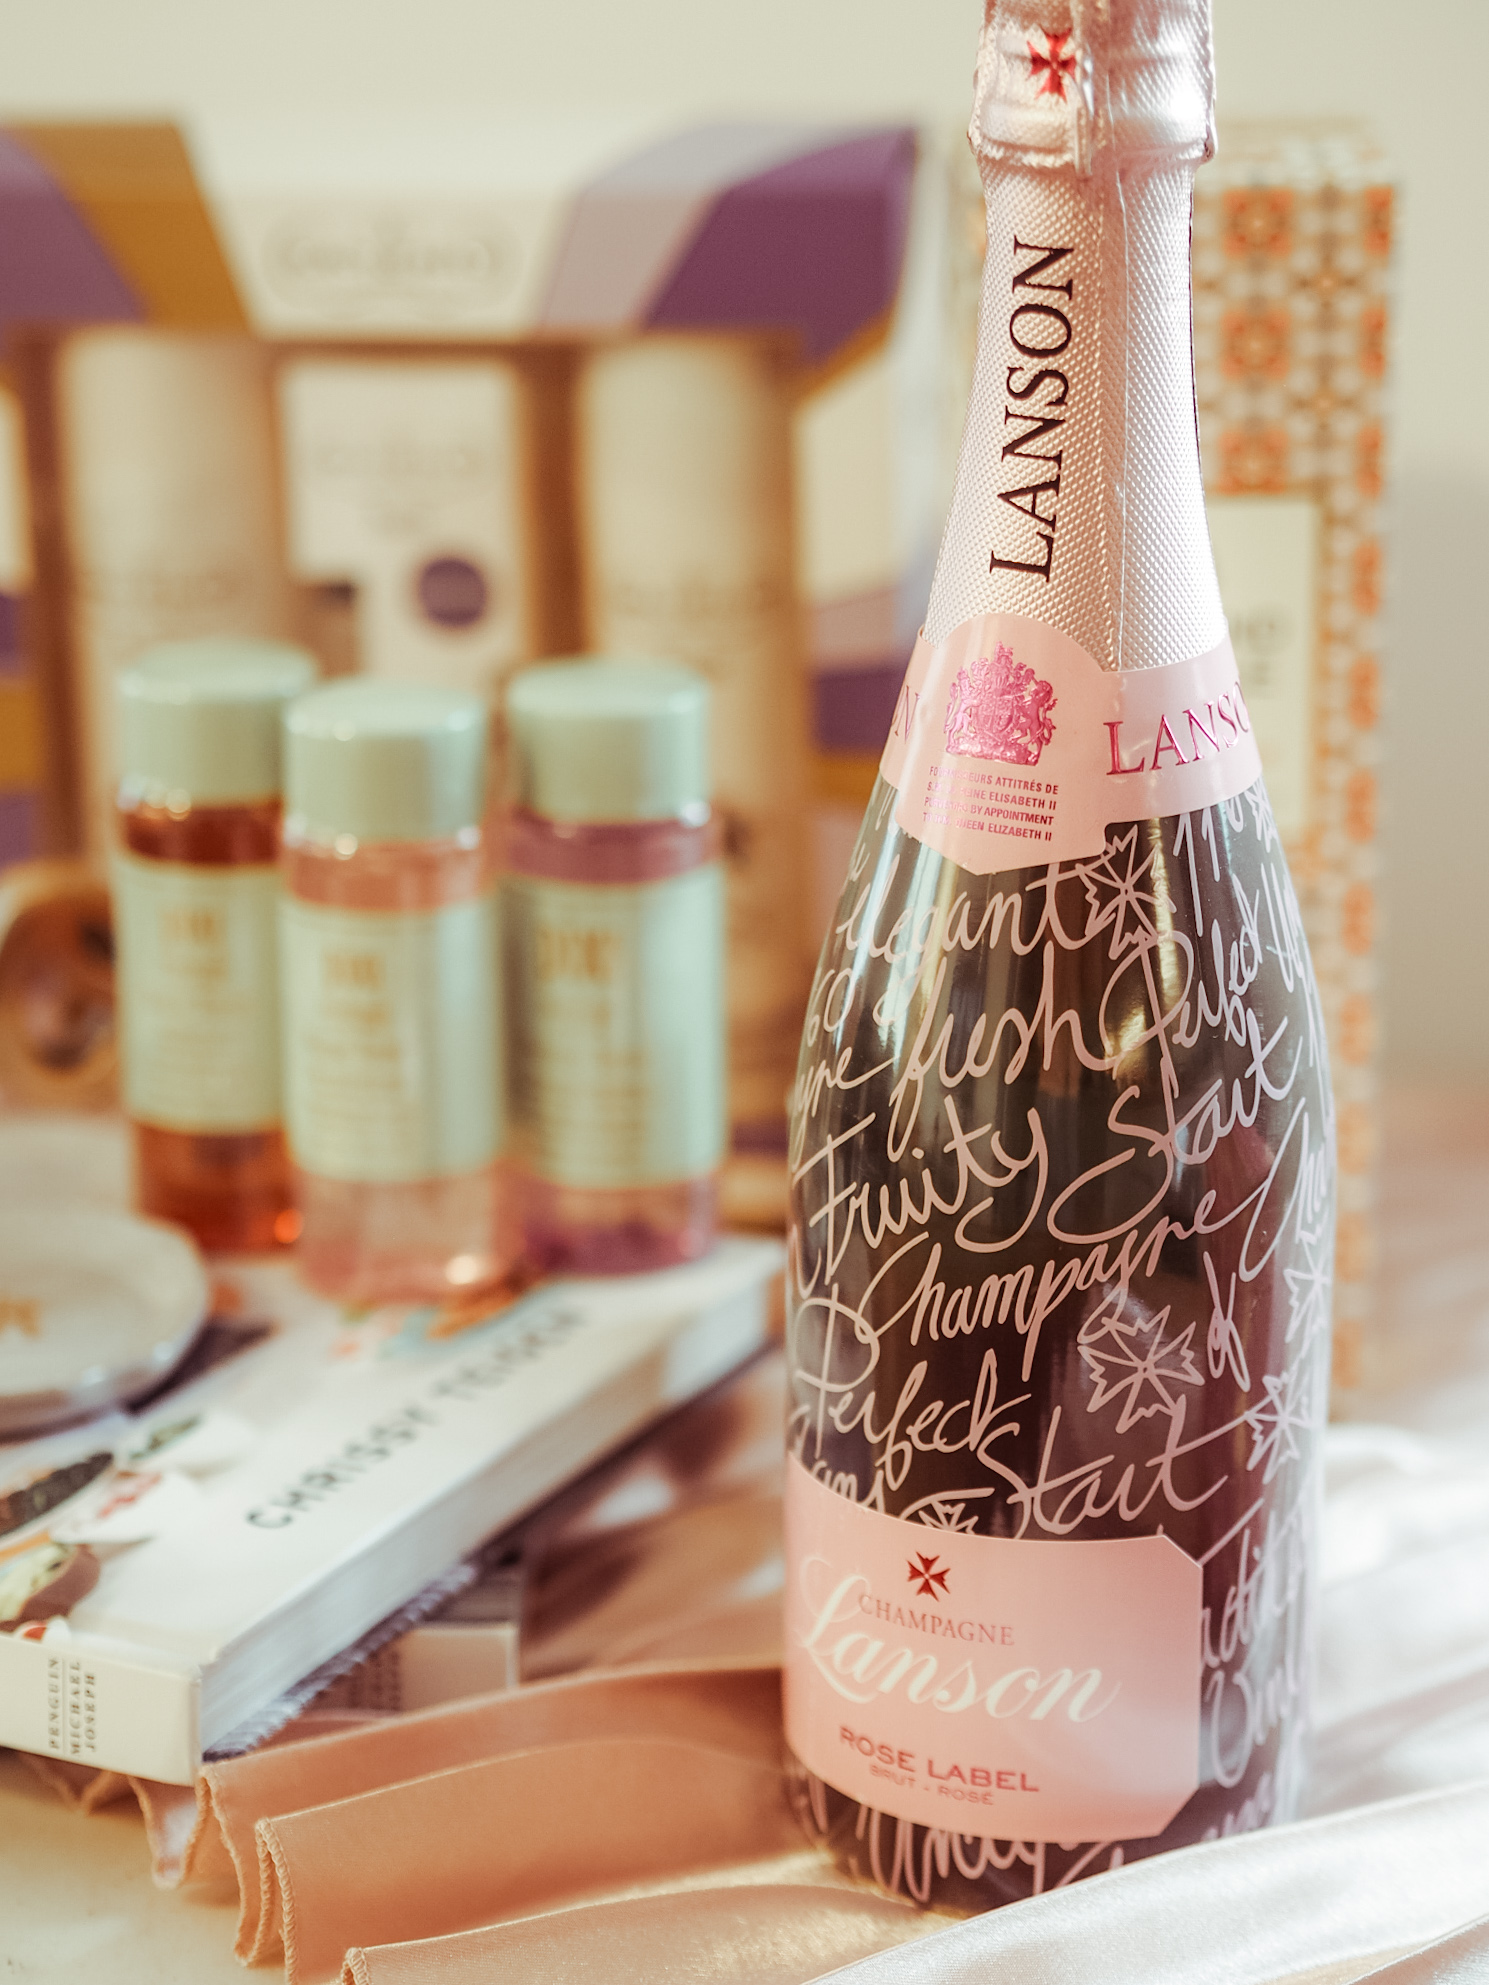 Lanson Rose Champagne - LemonaidLies gift guide